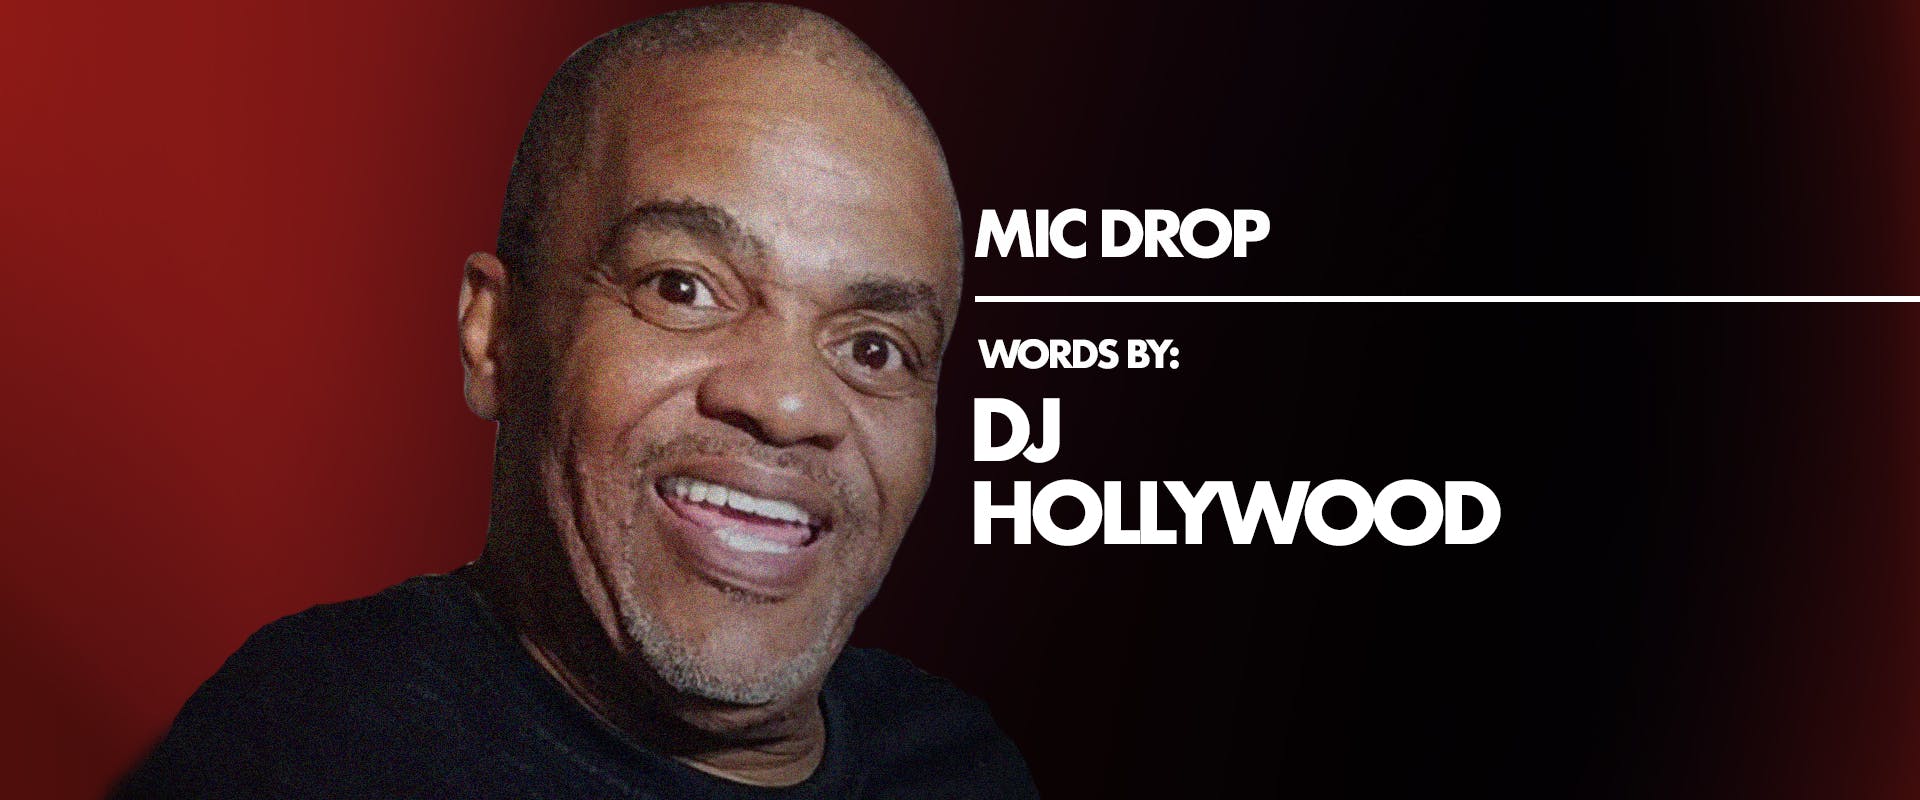 MIC DROP: DJ HOLLYWOOD